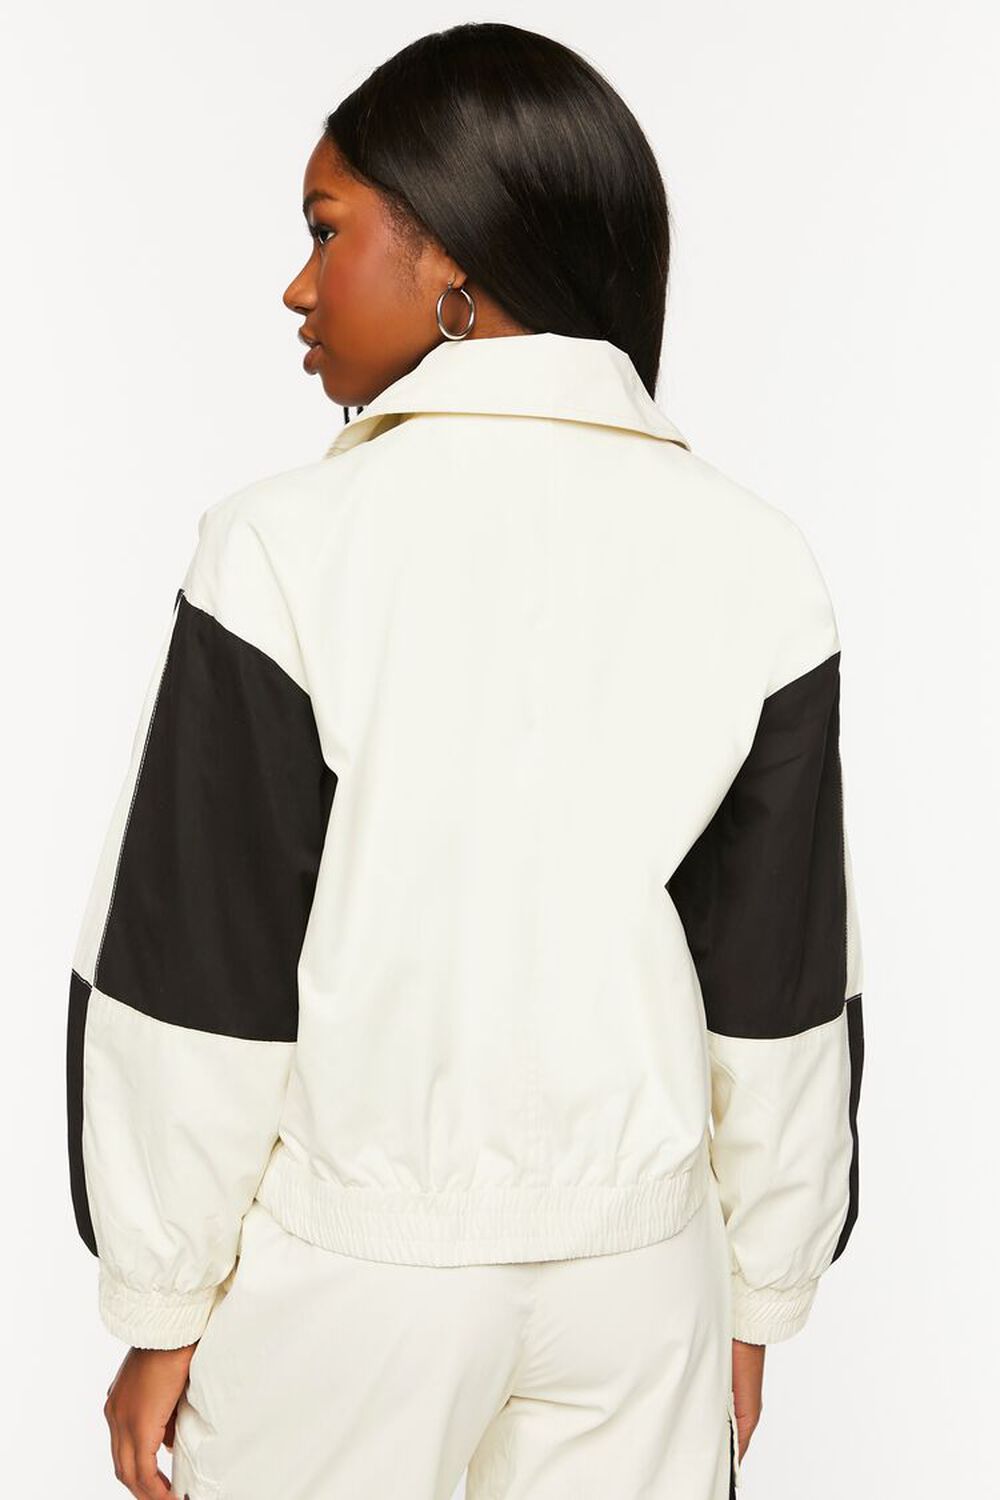 IVORY/BLACK Colorblock Zip-Up Jacket, image 3